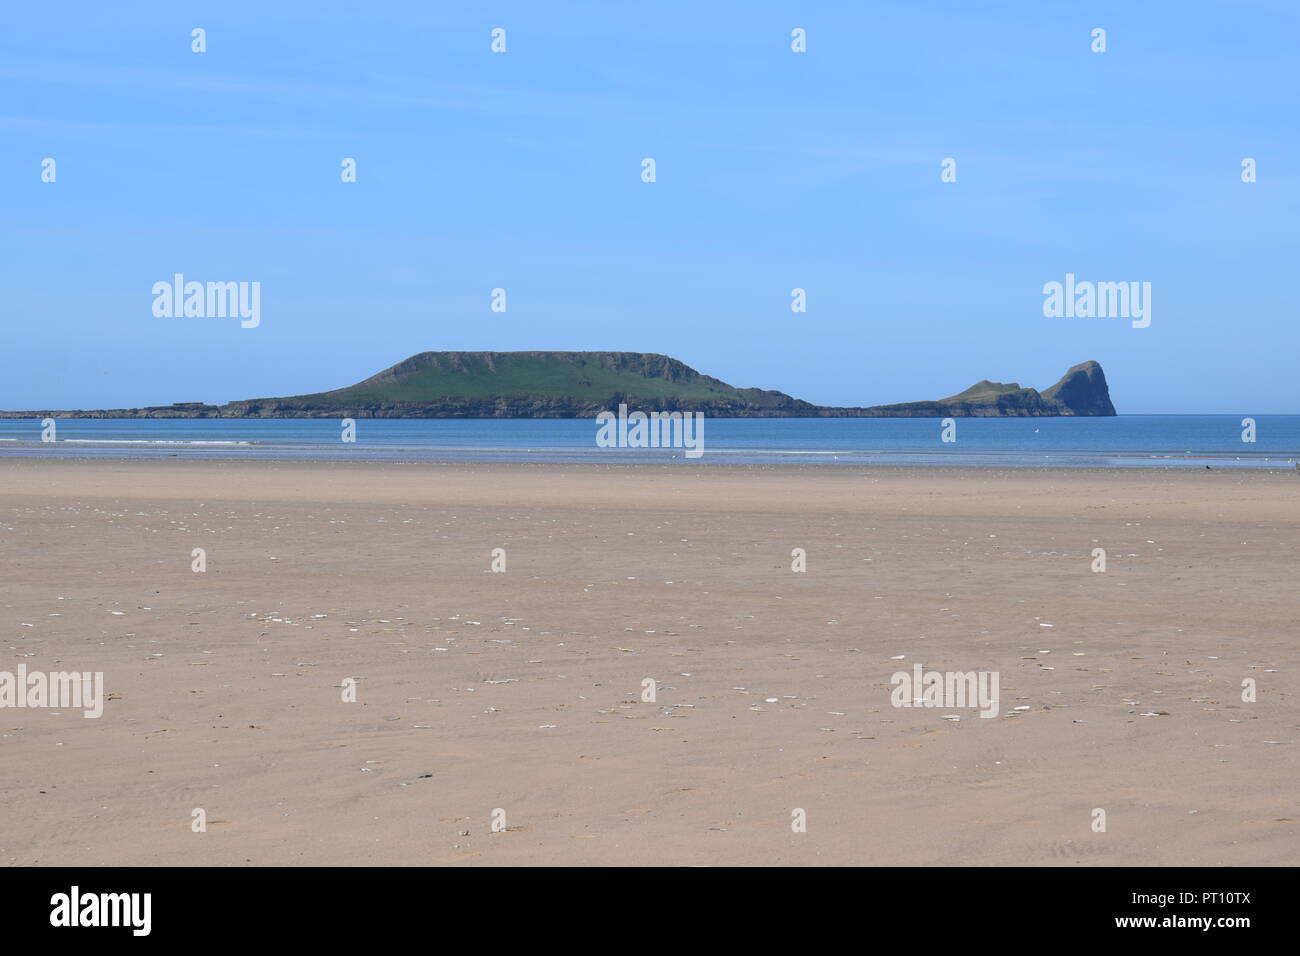 The island off Rhossili Beach Stock Photo